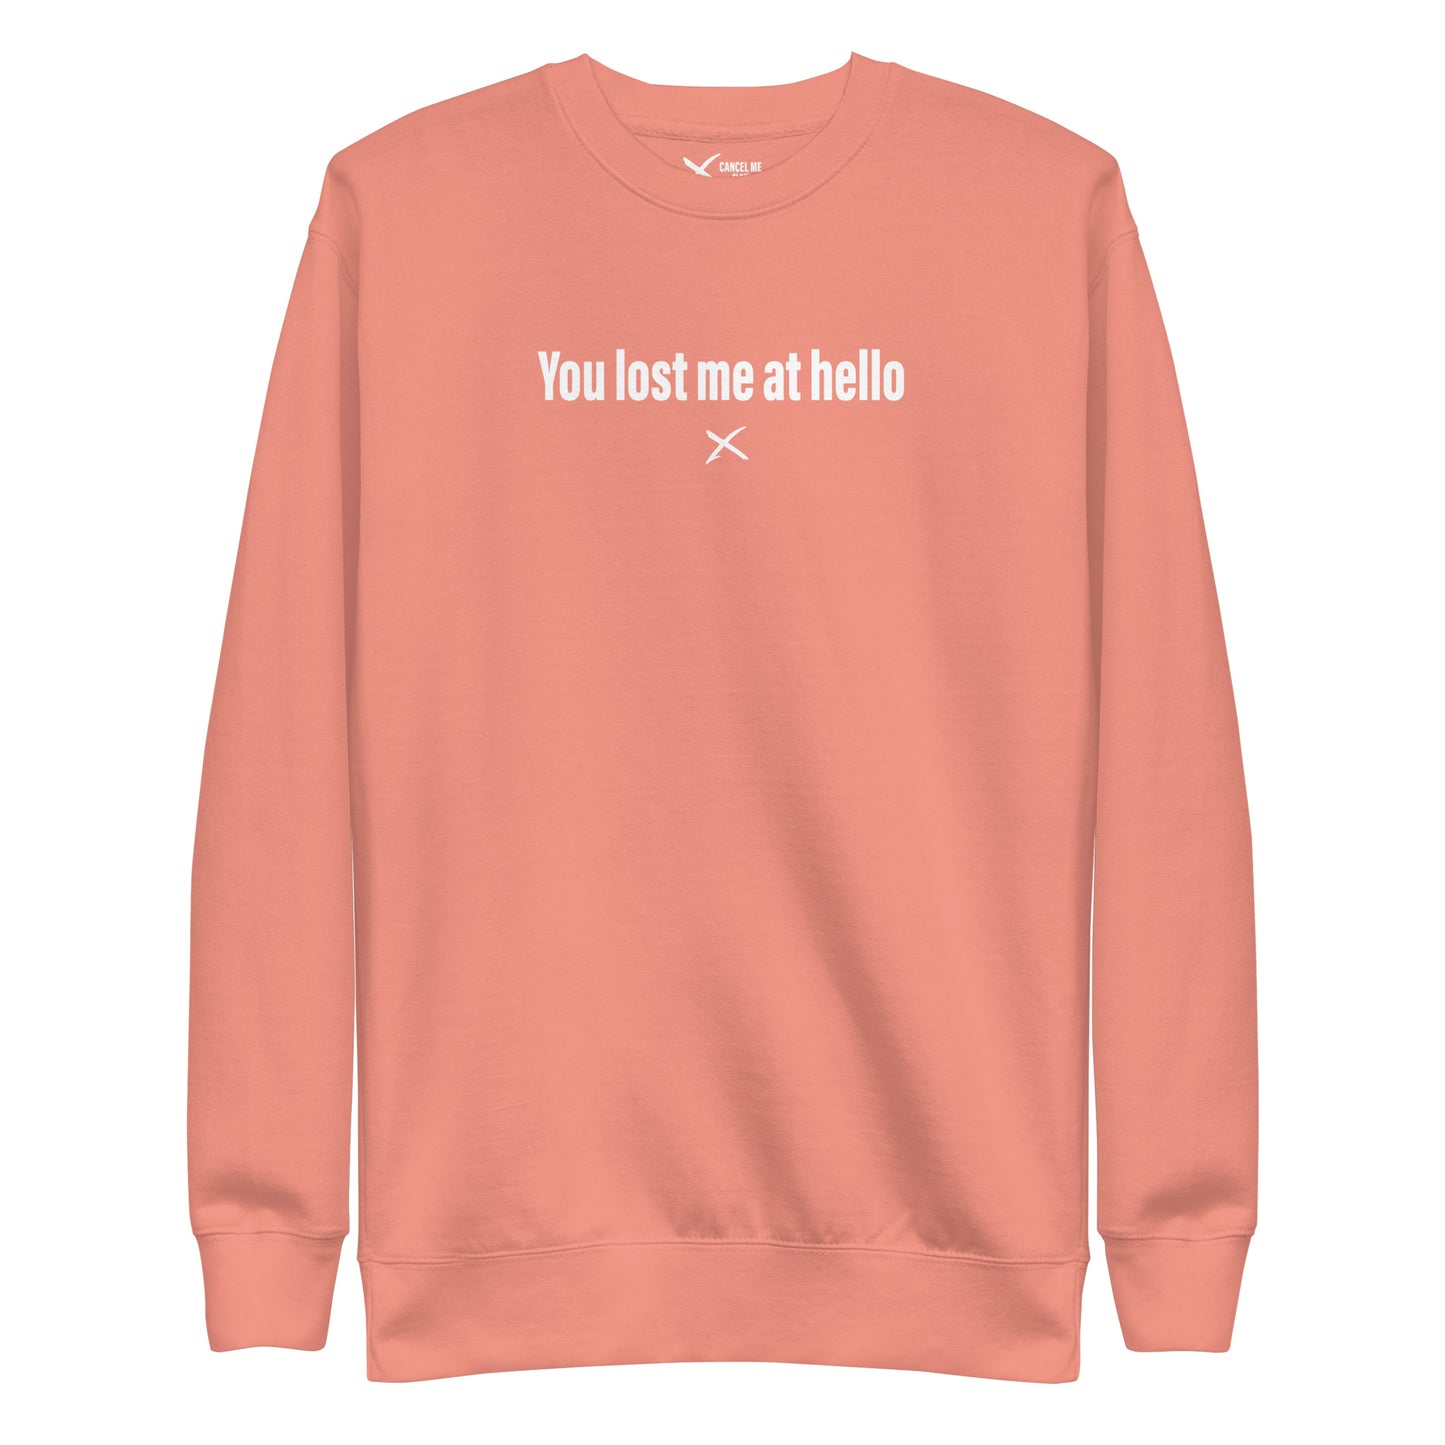 You lost me at hello - Sweatshirt